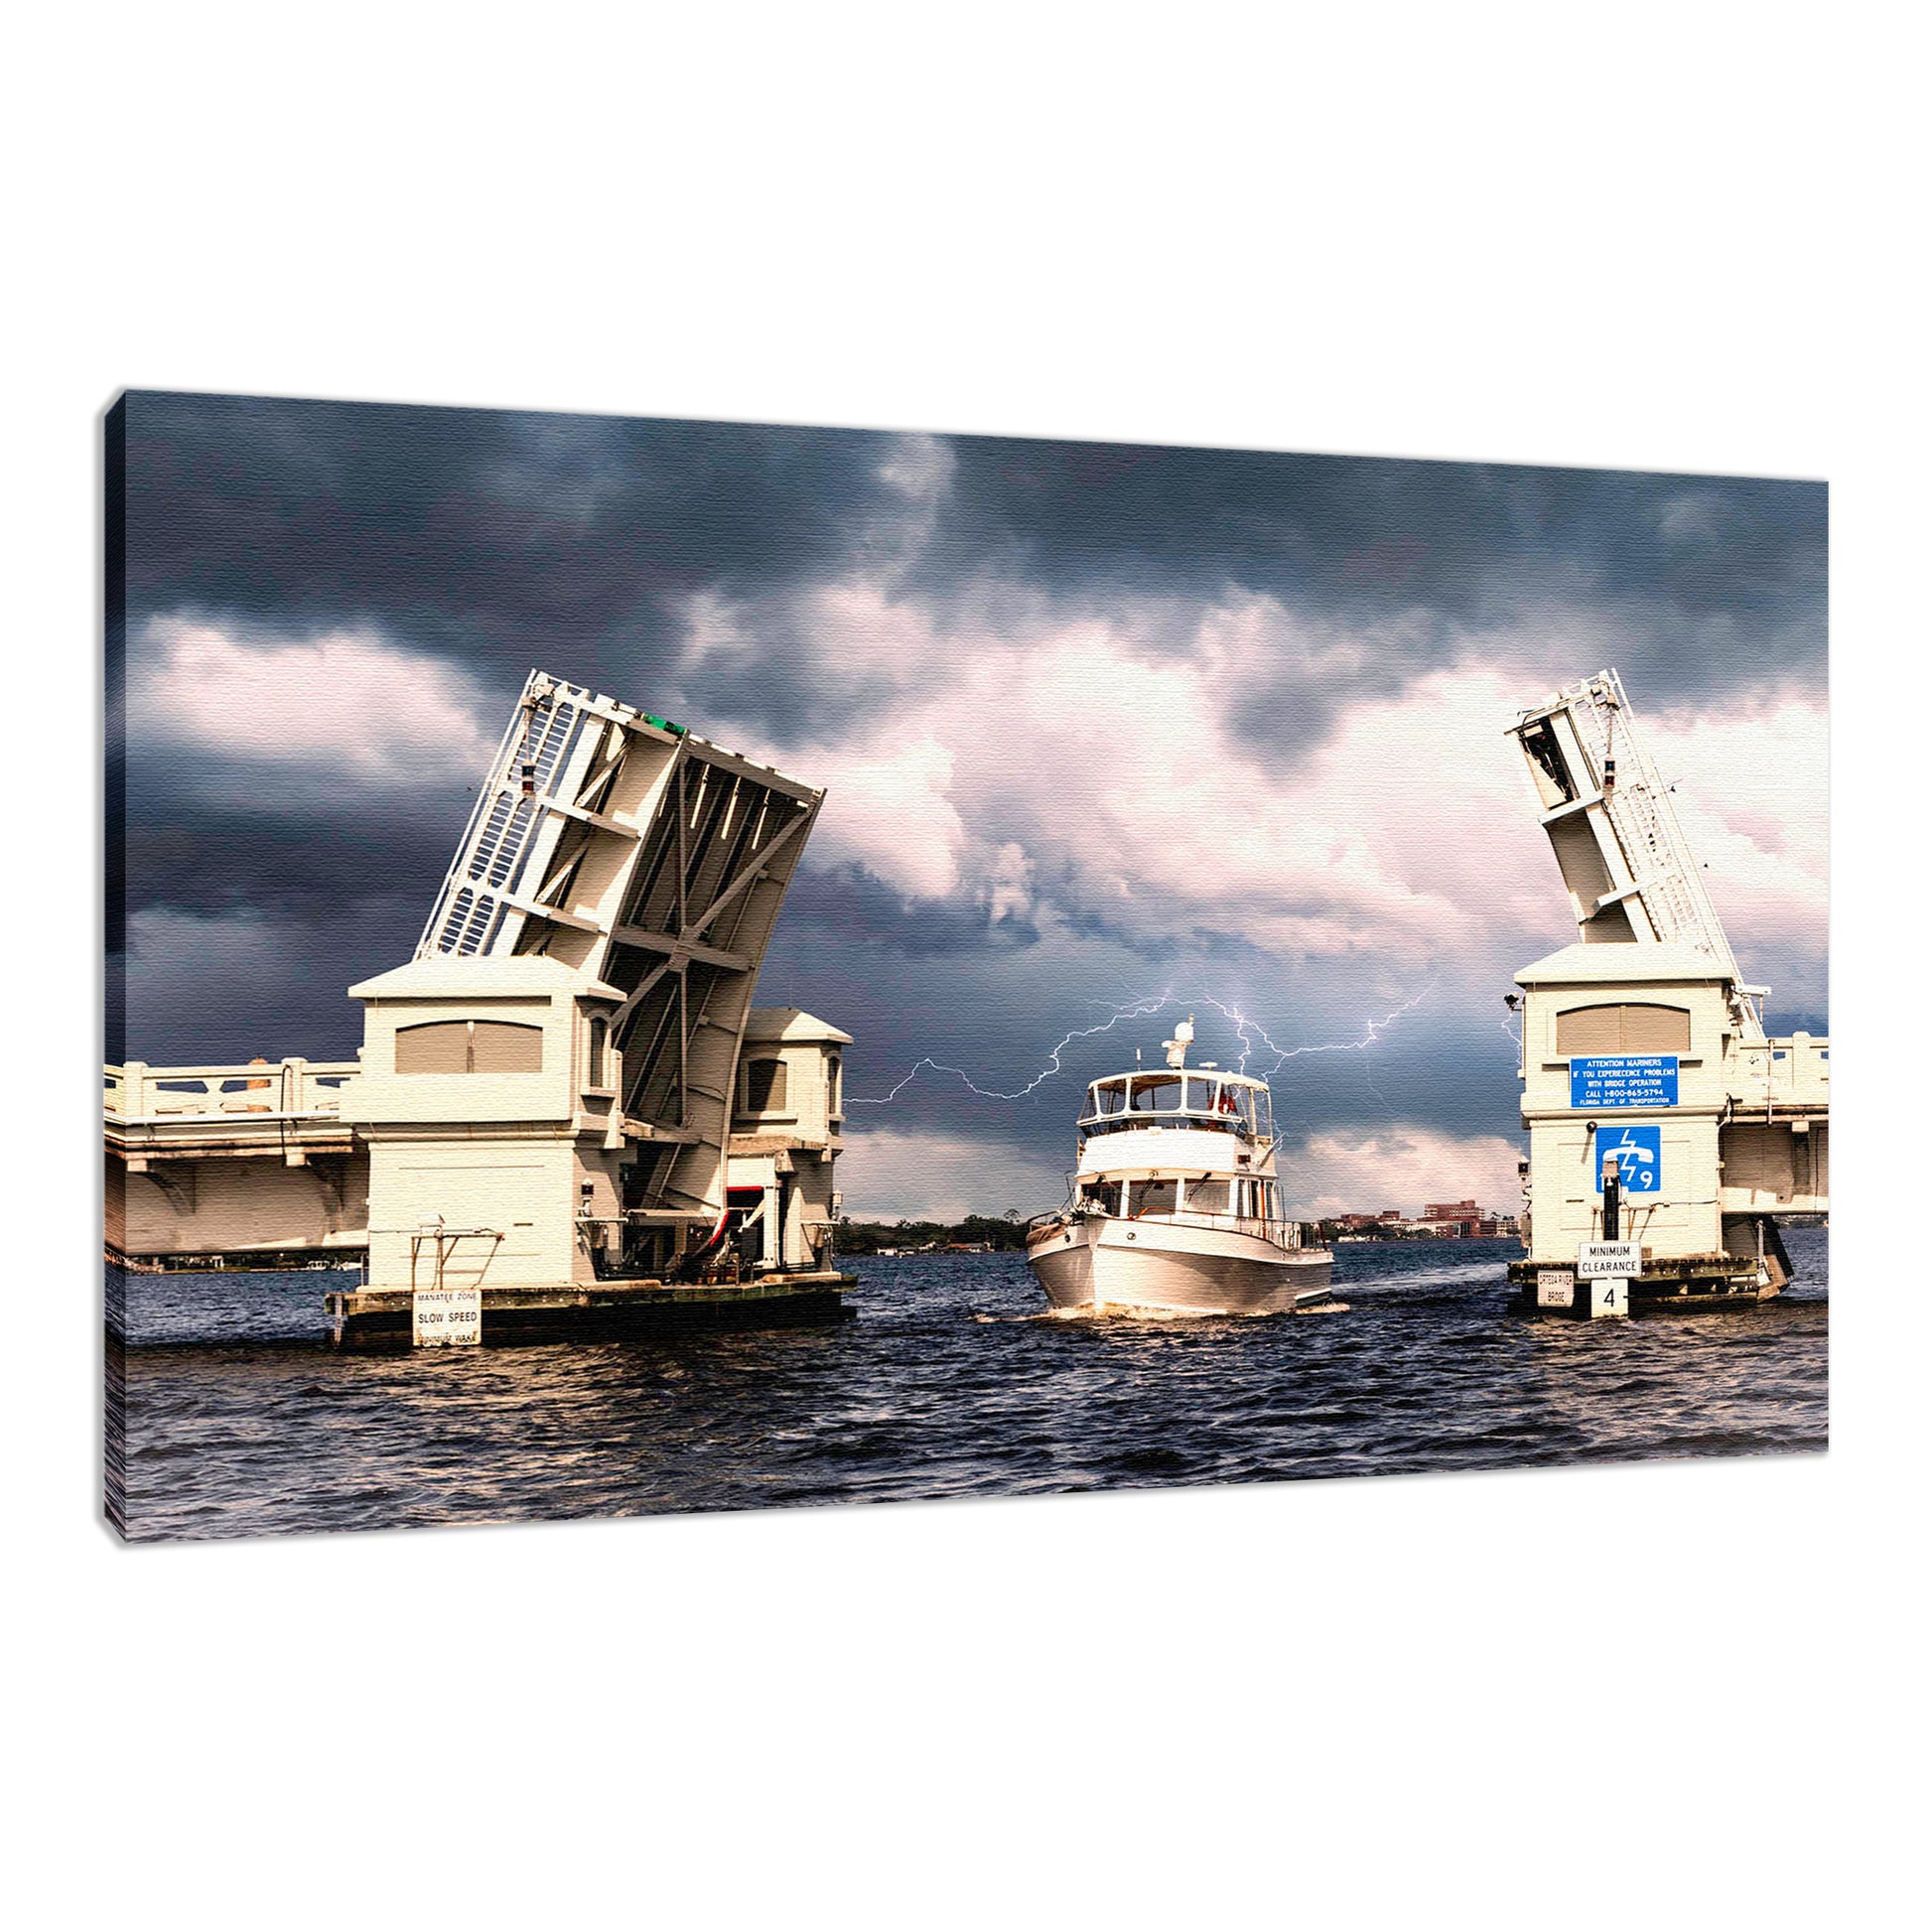 Nautical Wall Accents: Stormy Drawbridge and Boat Racing Towards the Sun Coastal Urban Landscape Photo Fine Art Canvas Wall Art Print